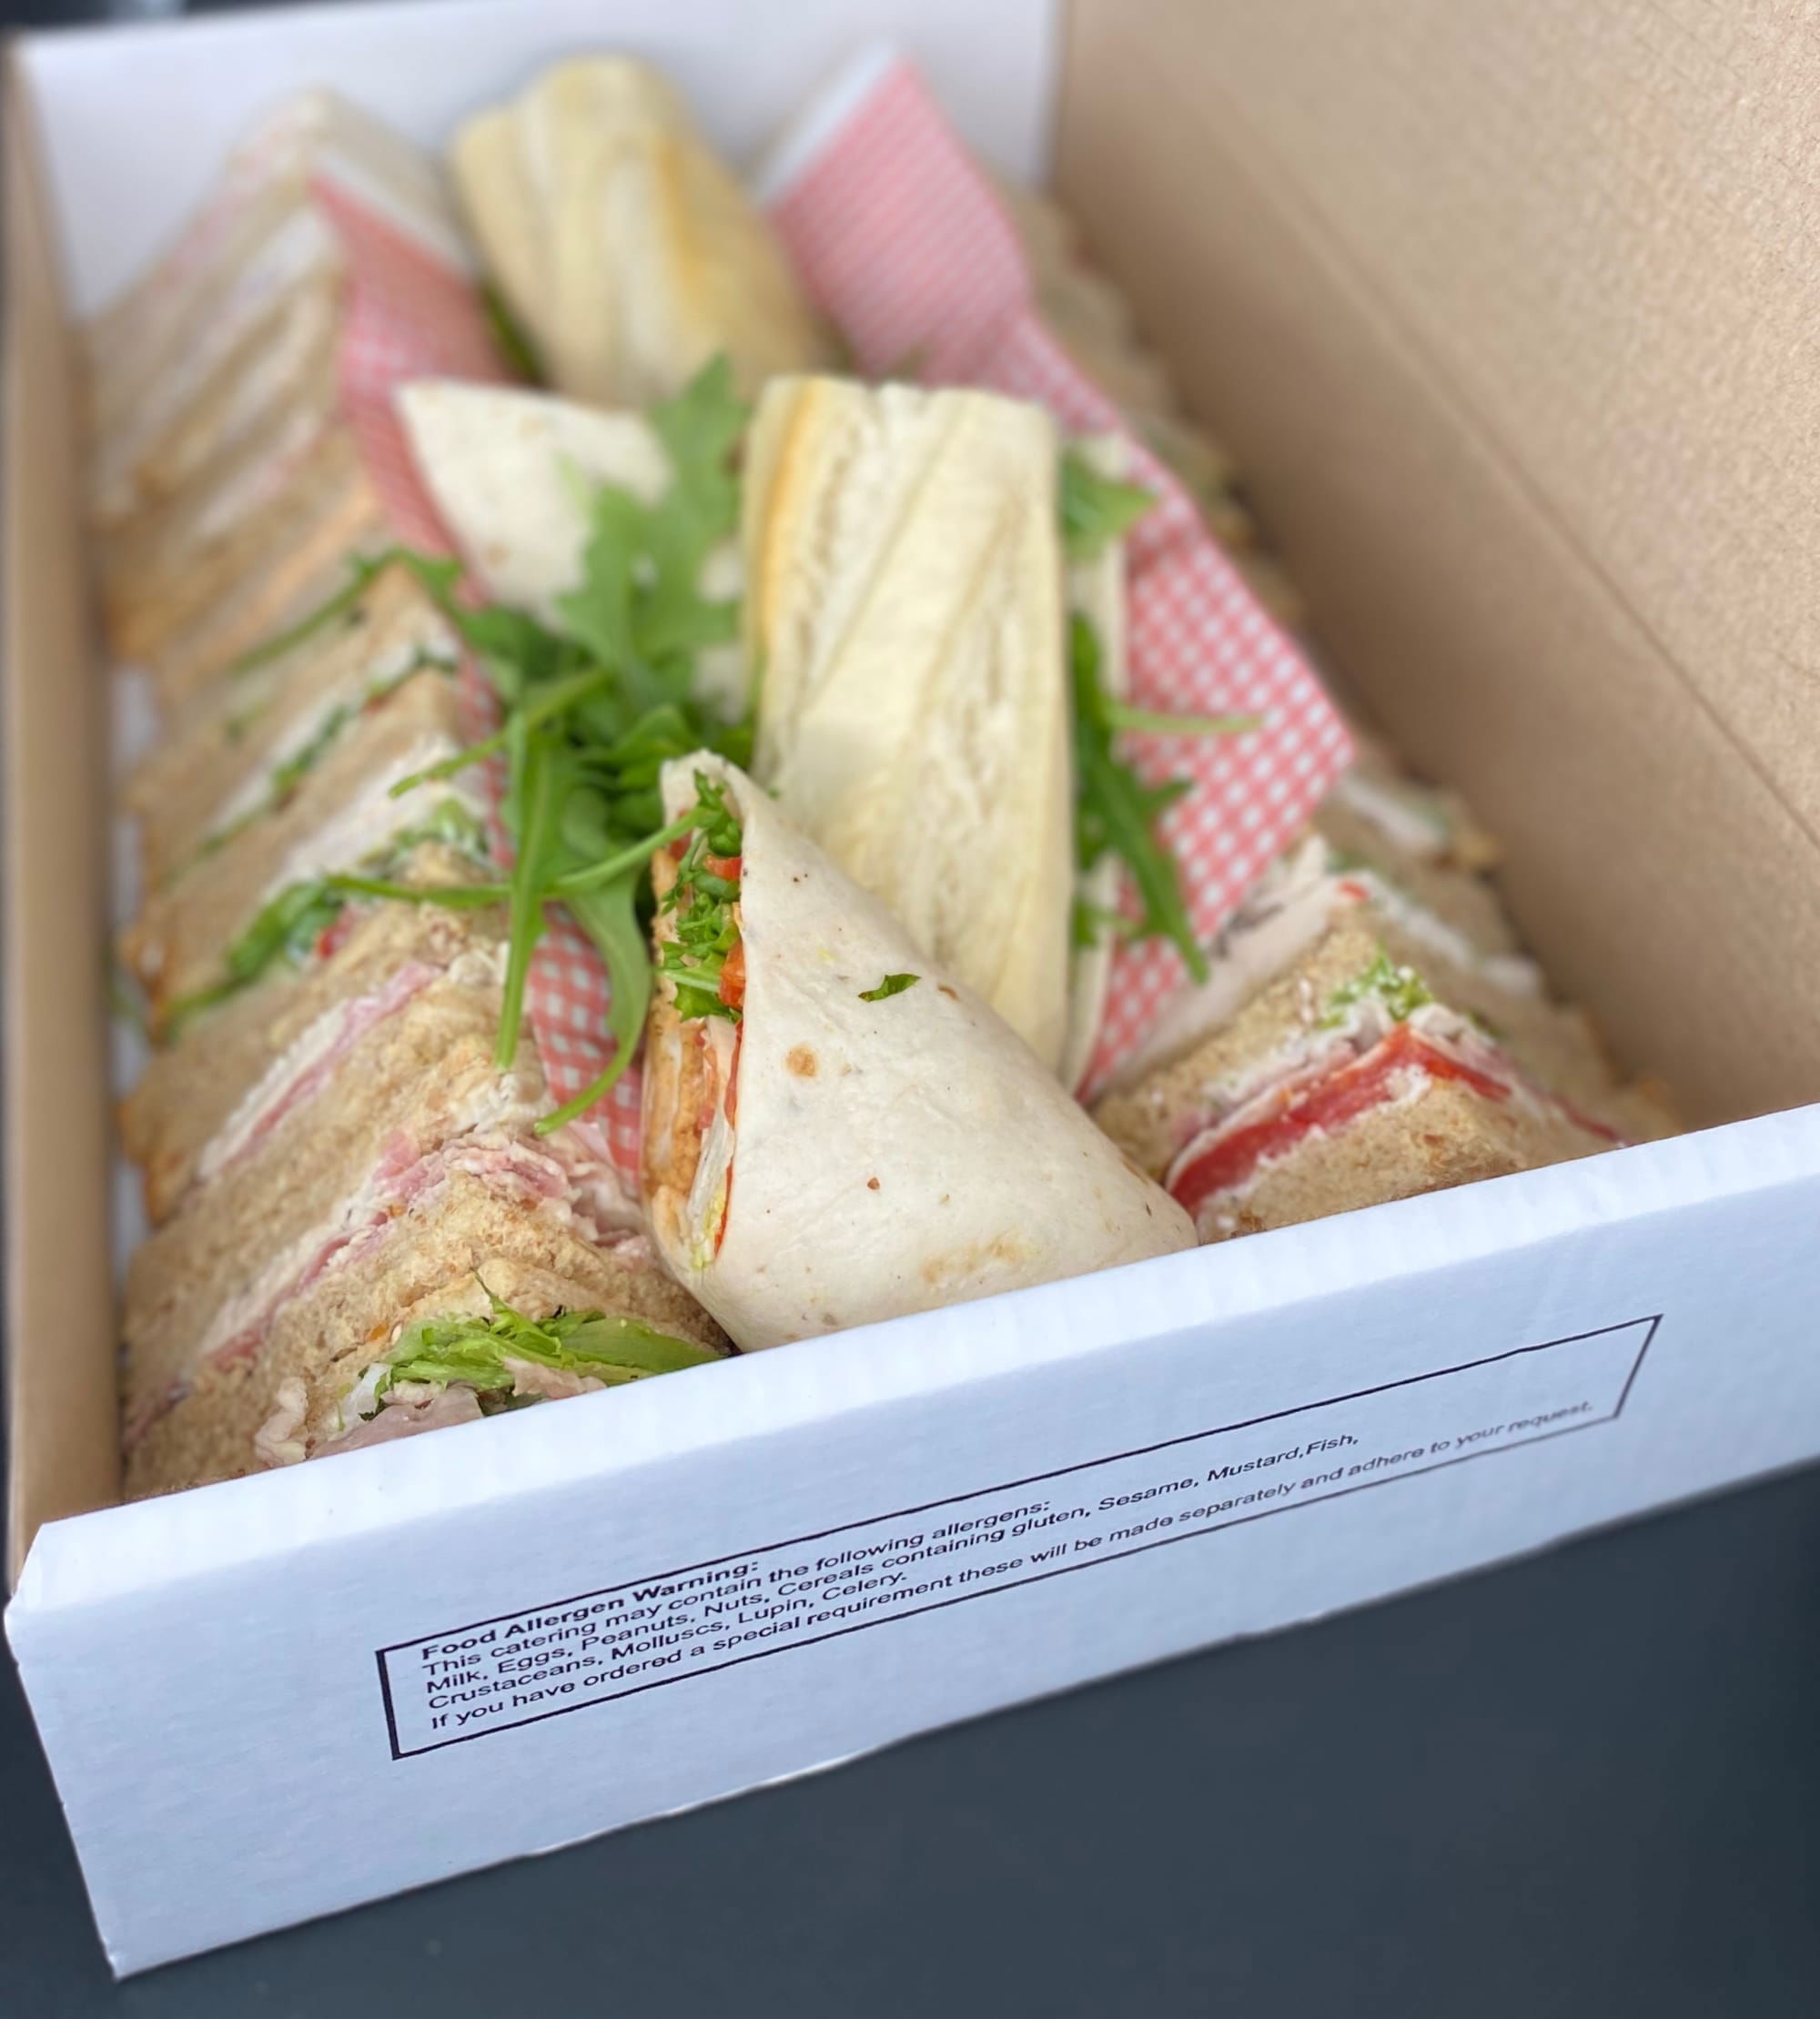 The classic sandwich platters box